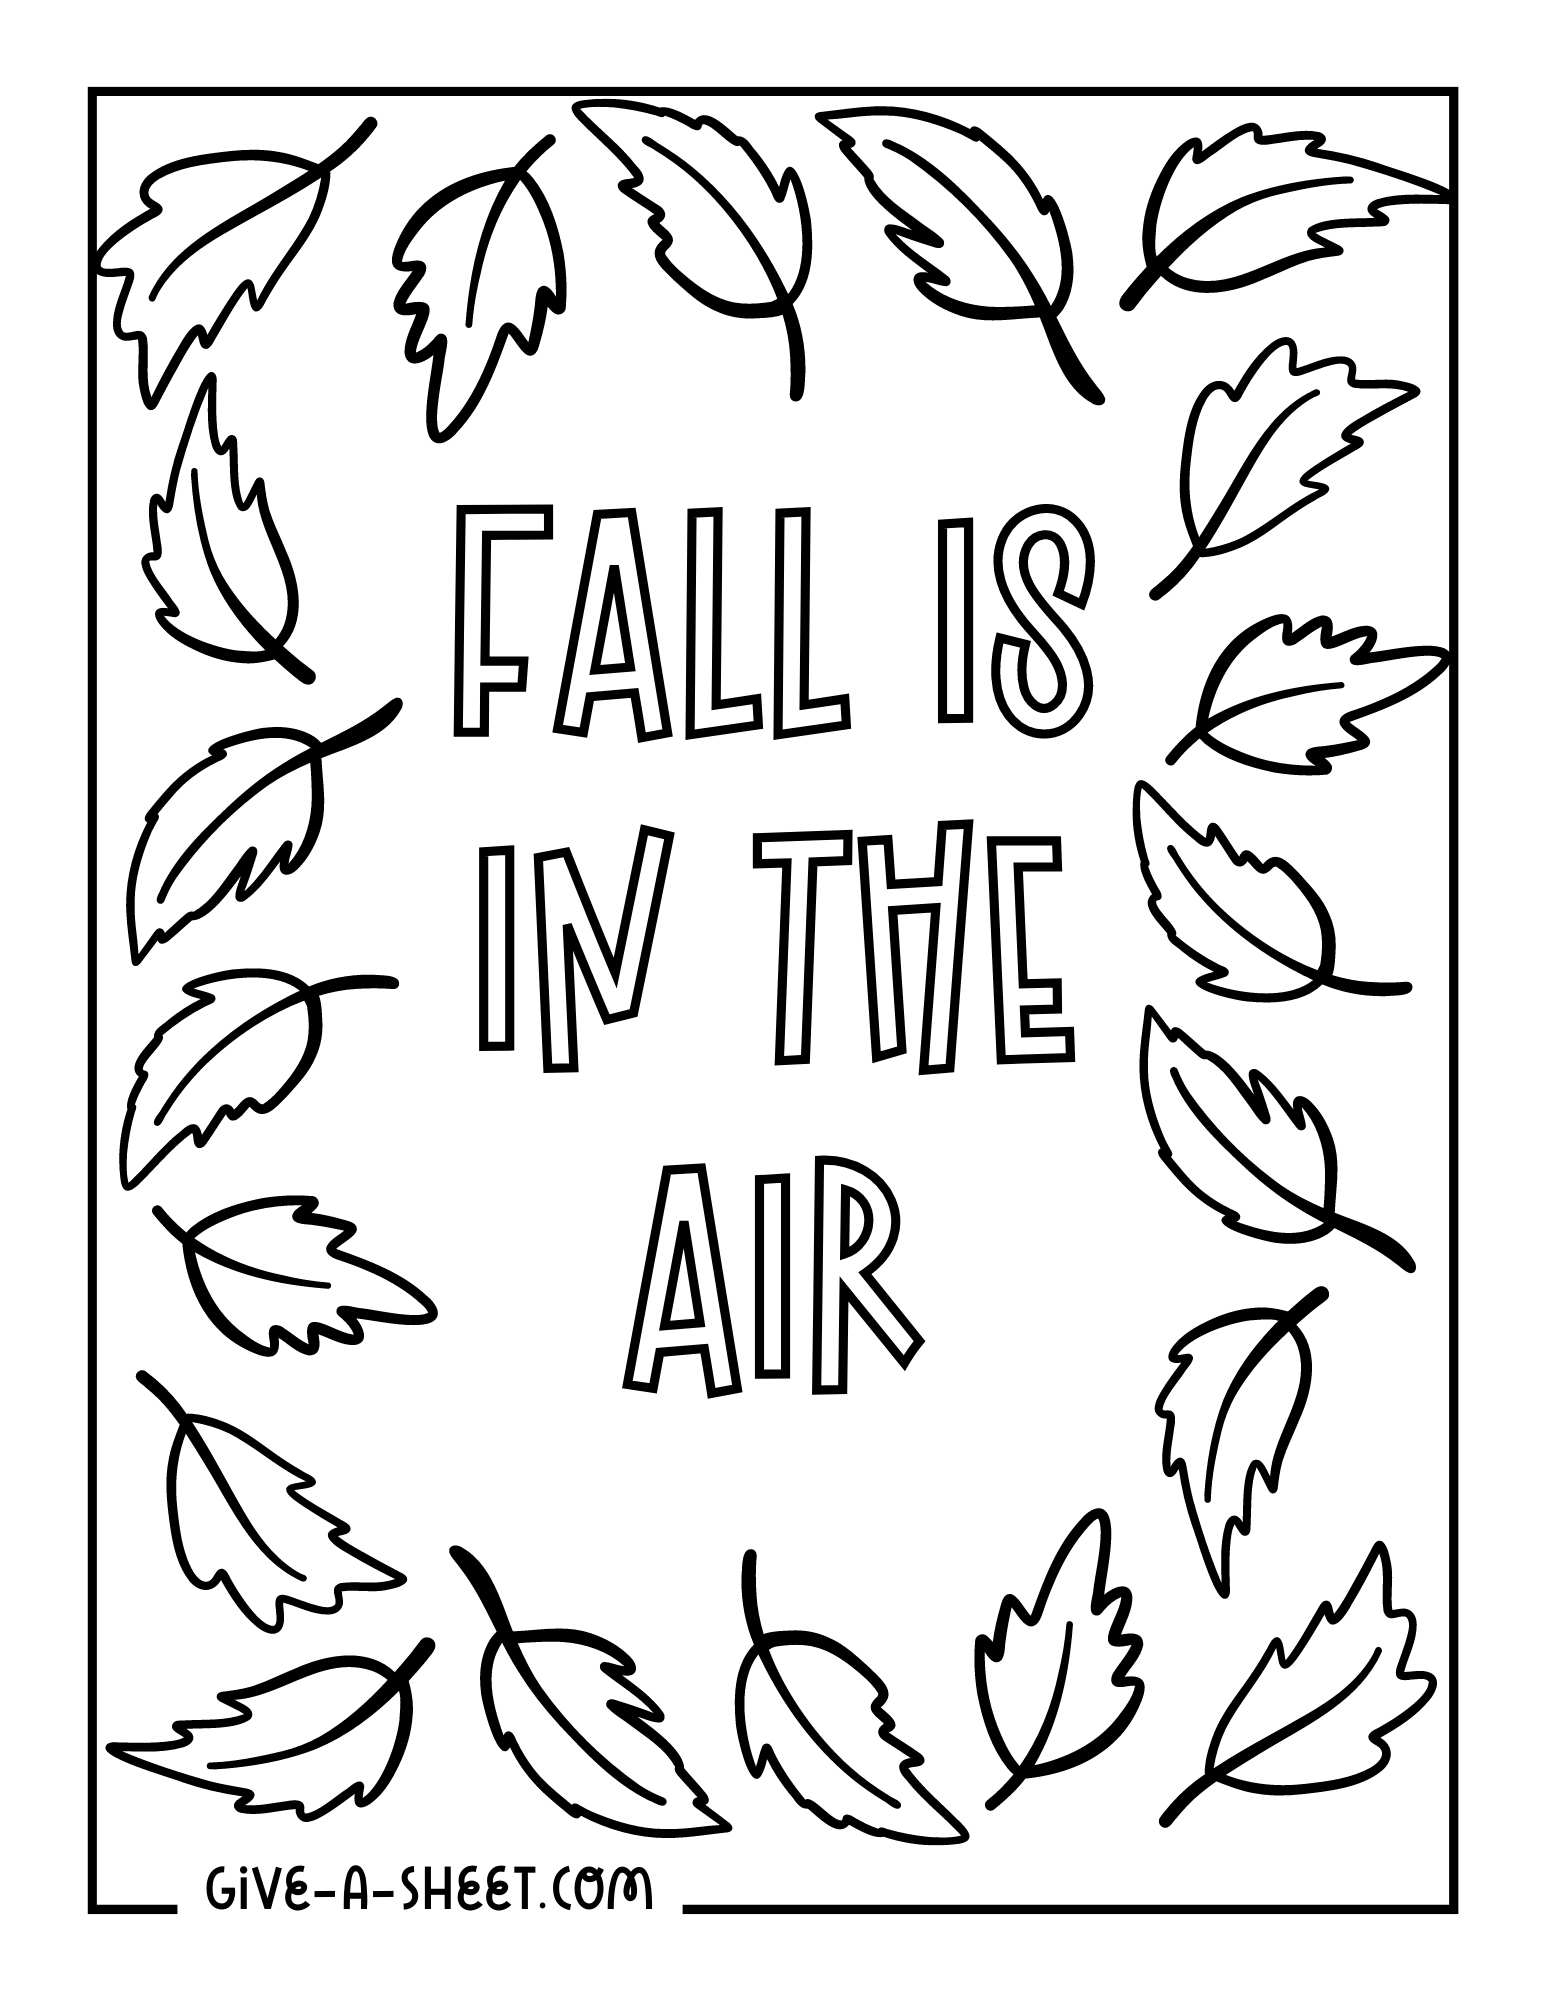 Fall season coloring page.